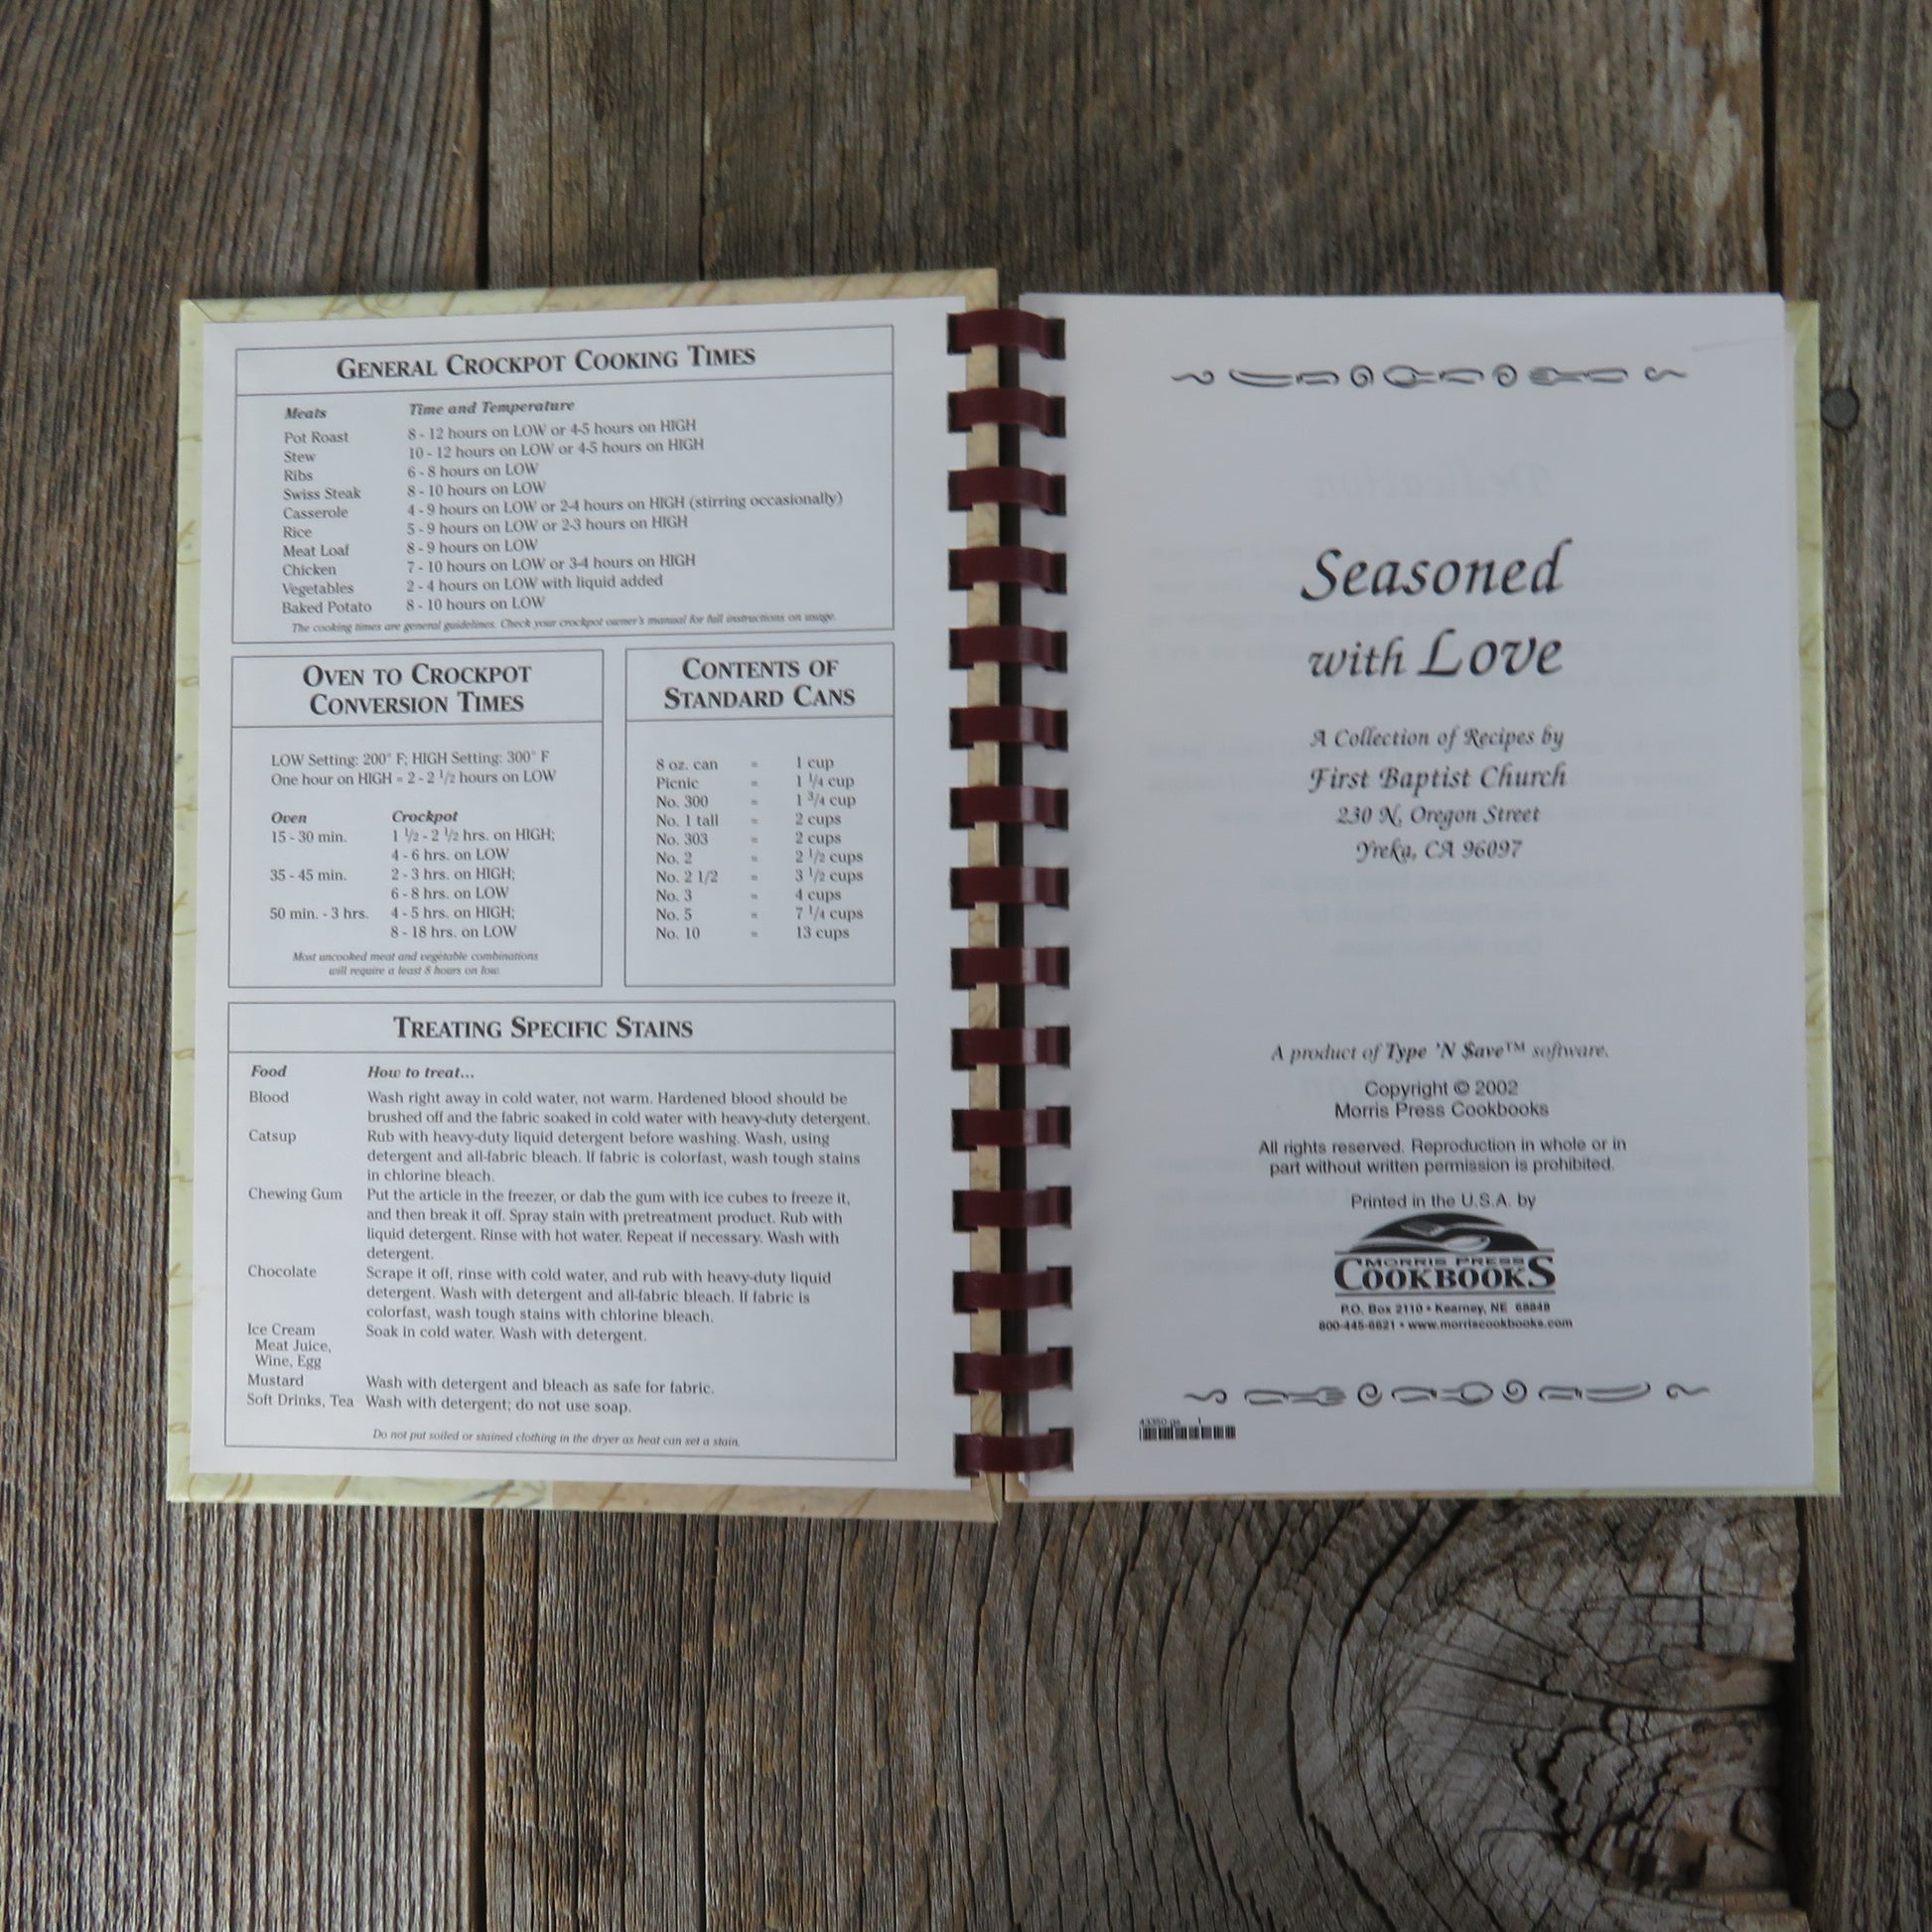 California Church Cookbook Yreka First Baptist Seasoned With Love 2002 - At Grandma's Table